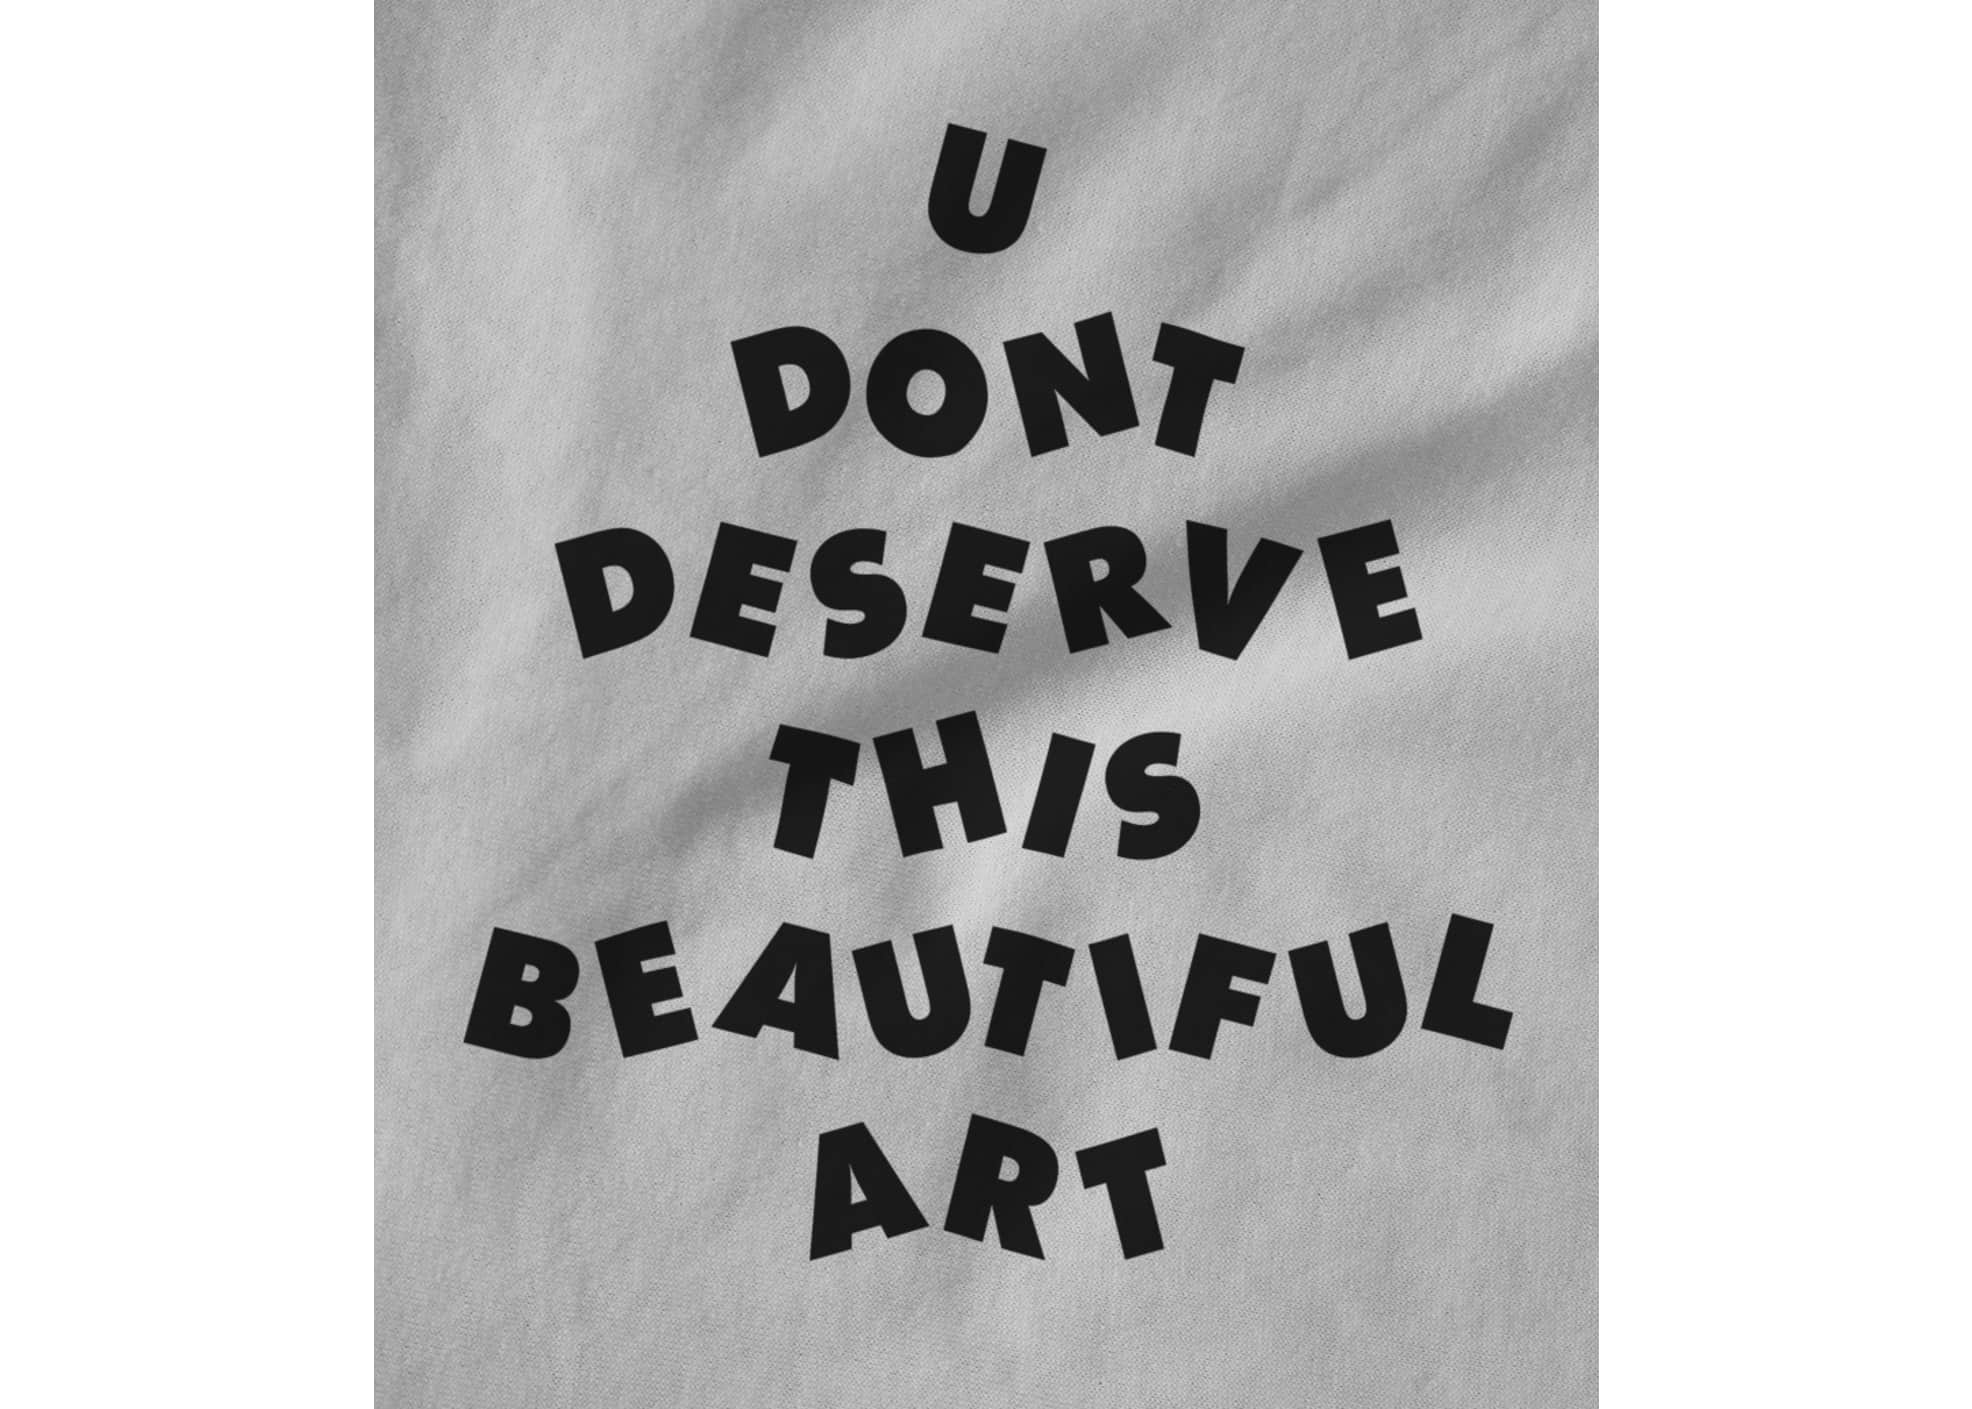 U don t deserve this beautiful art uddtba logo 1514688270